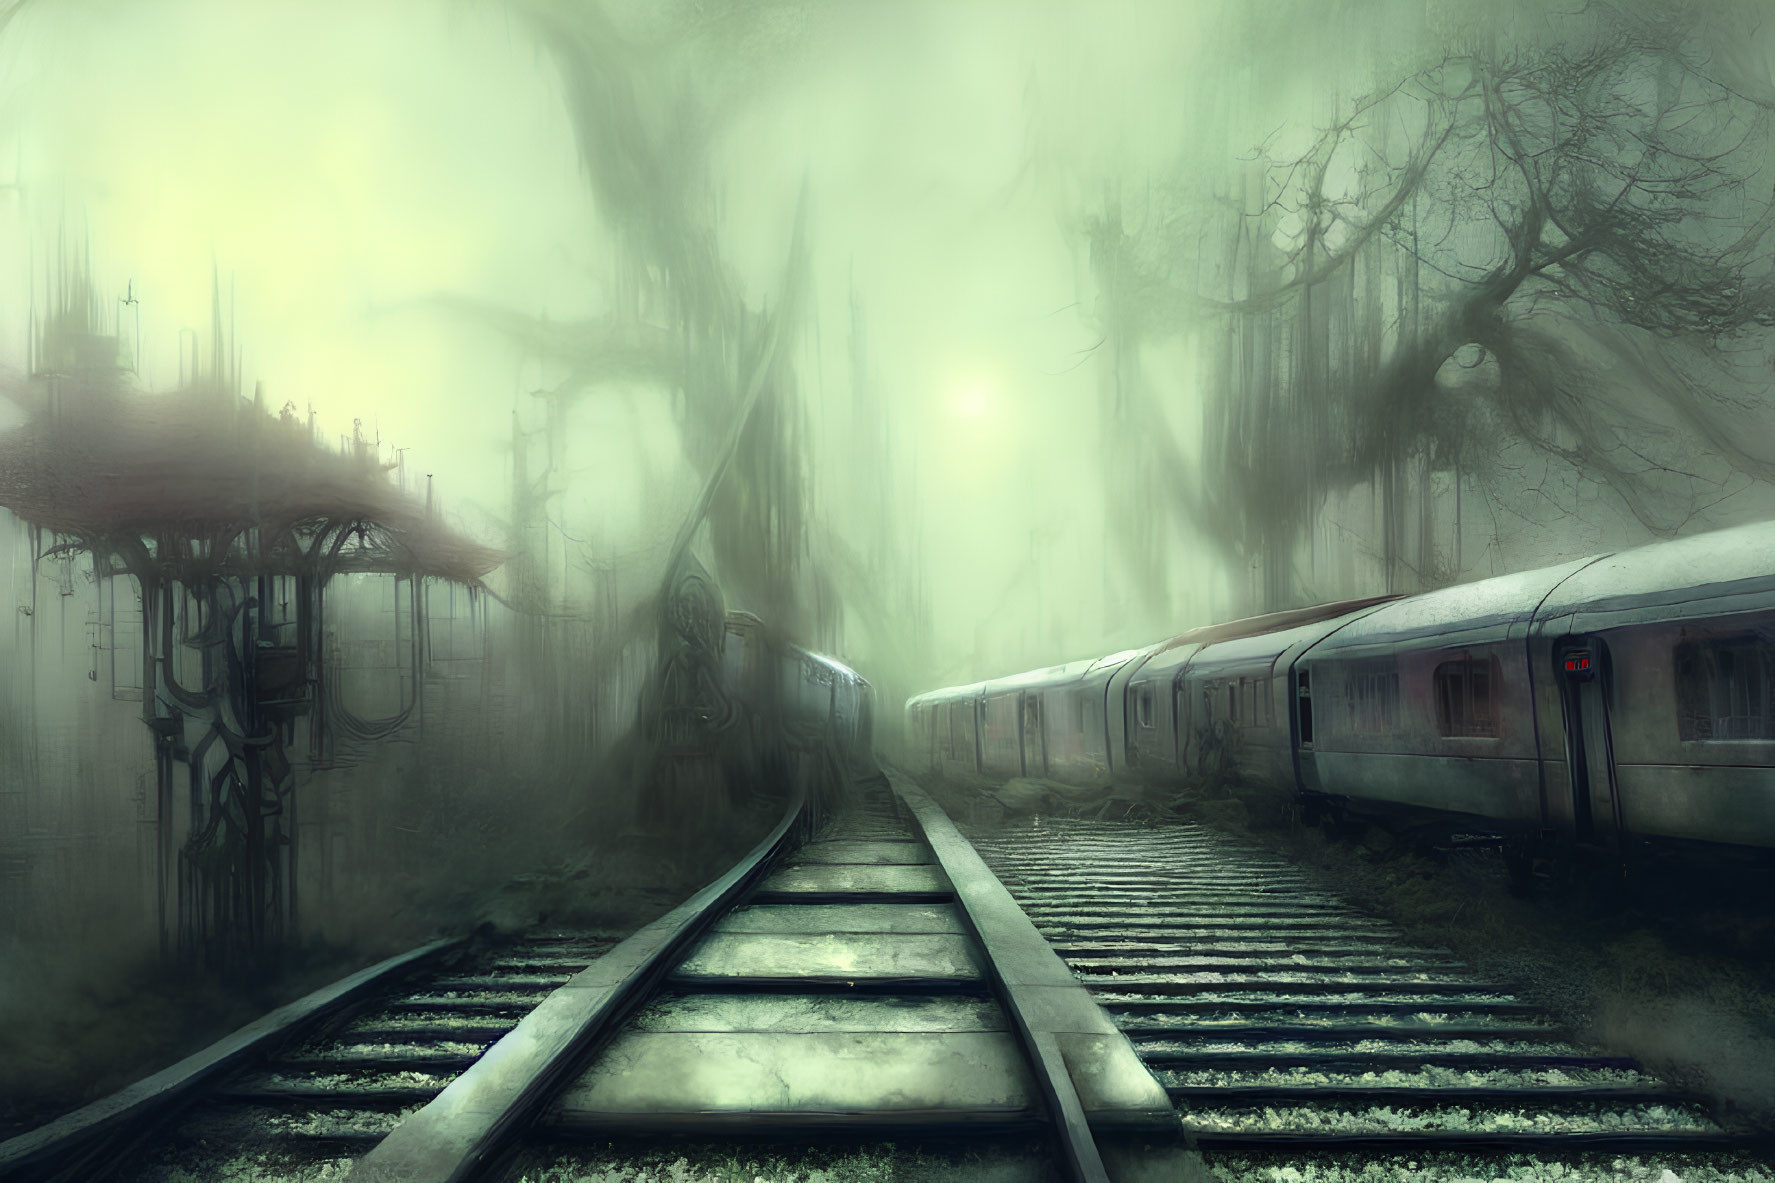 Abandoned train on overgrown tracks in foggy scene